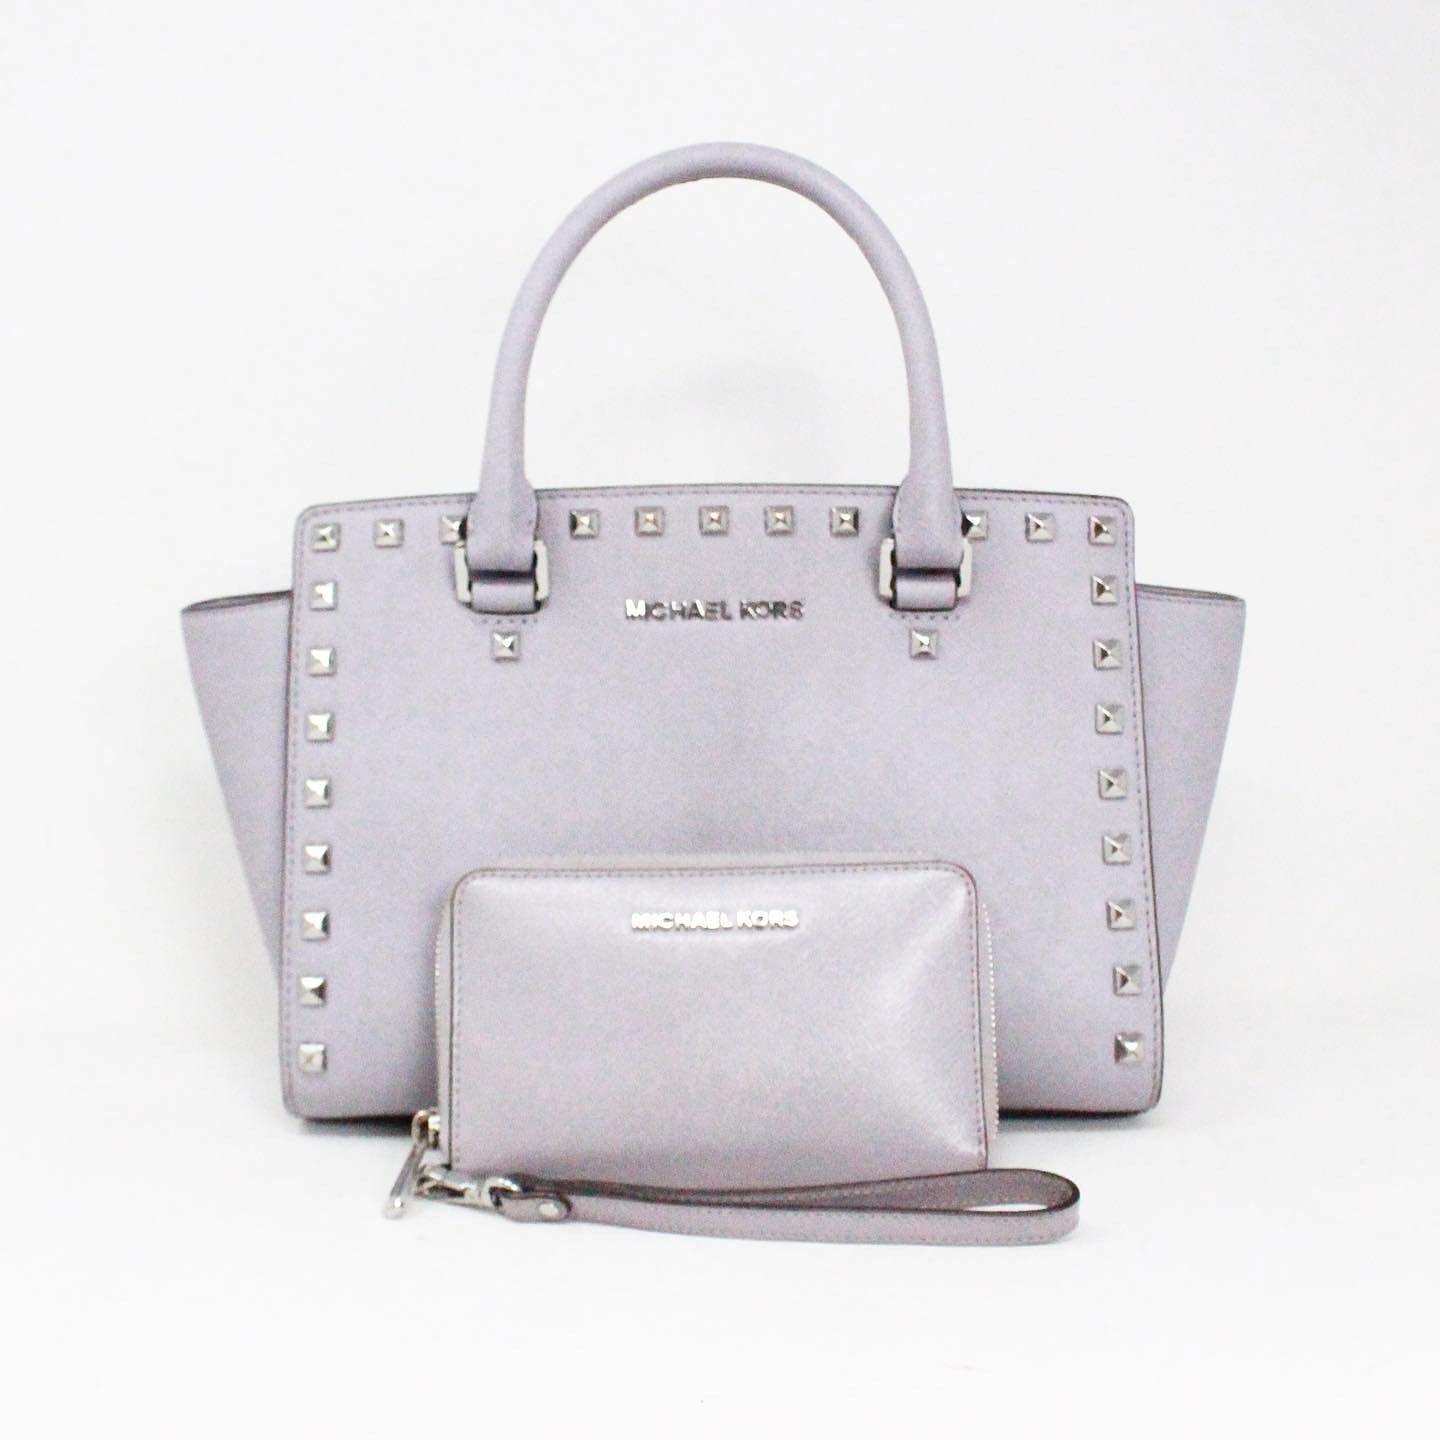 MICHAEL KORS #42099 Lilac Saffiano Leather Handbag & Wallet Bundle 1